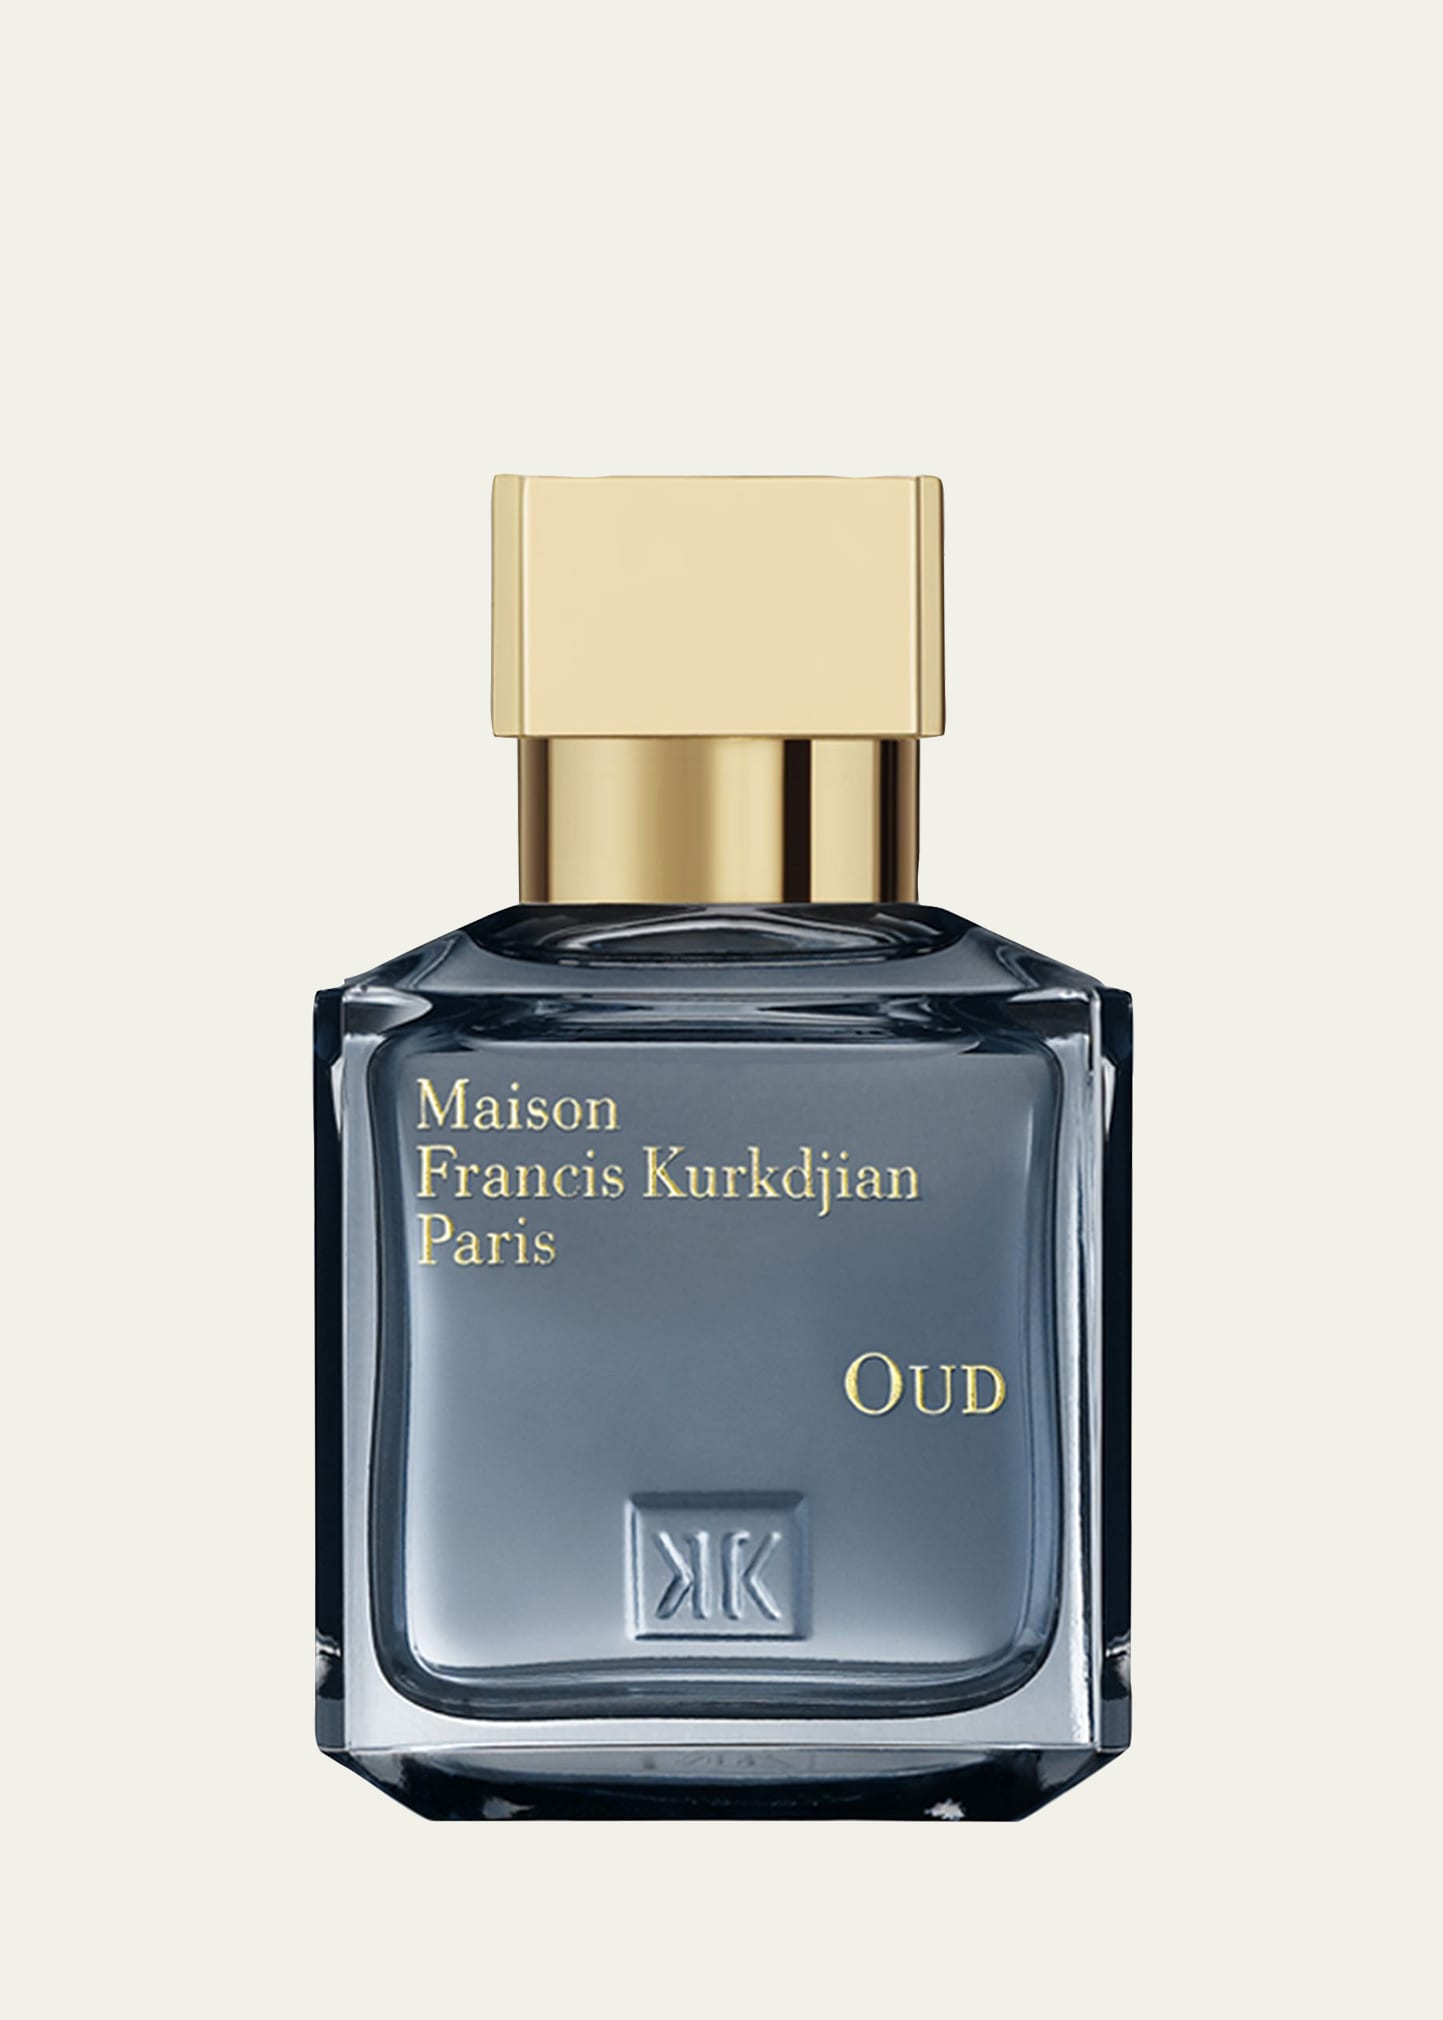 Maison Francis Kurkdjian OUD Eau de Parfum, 2.4 oz.